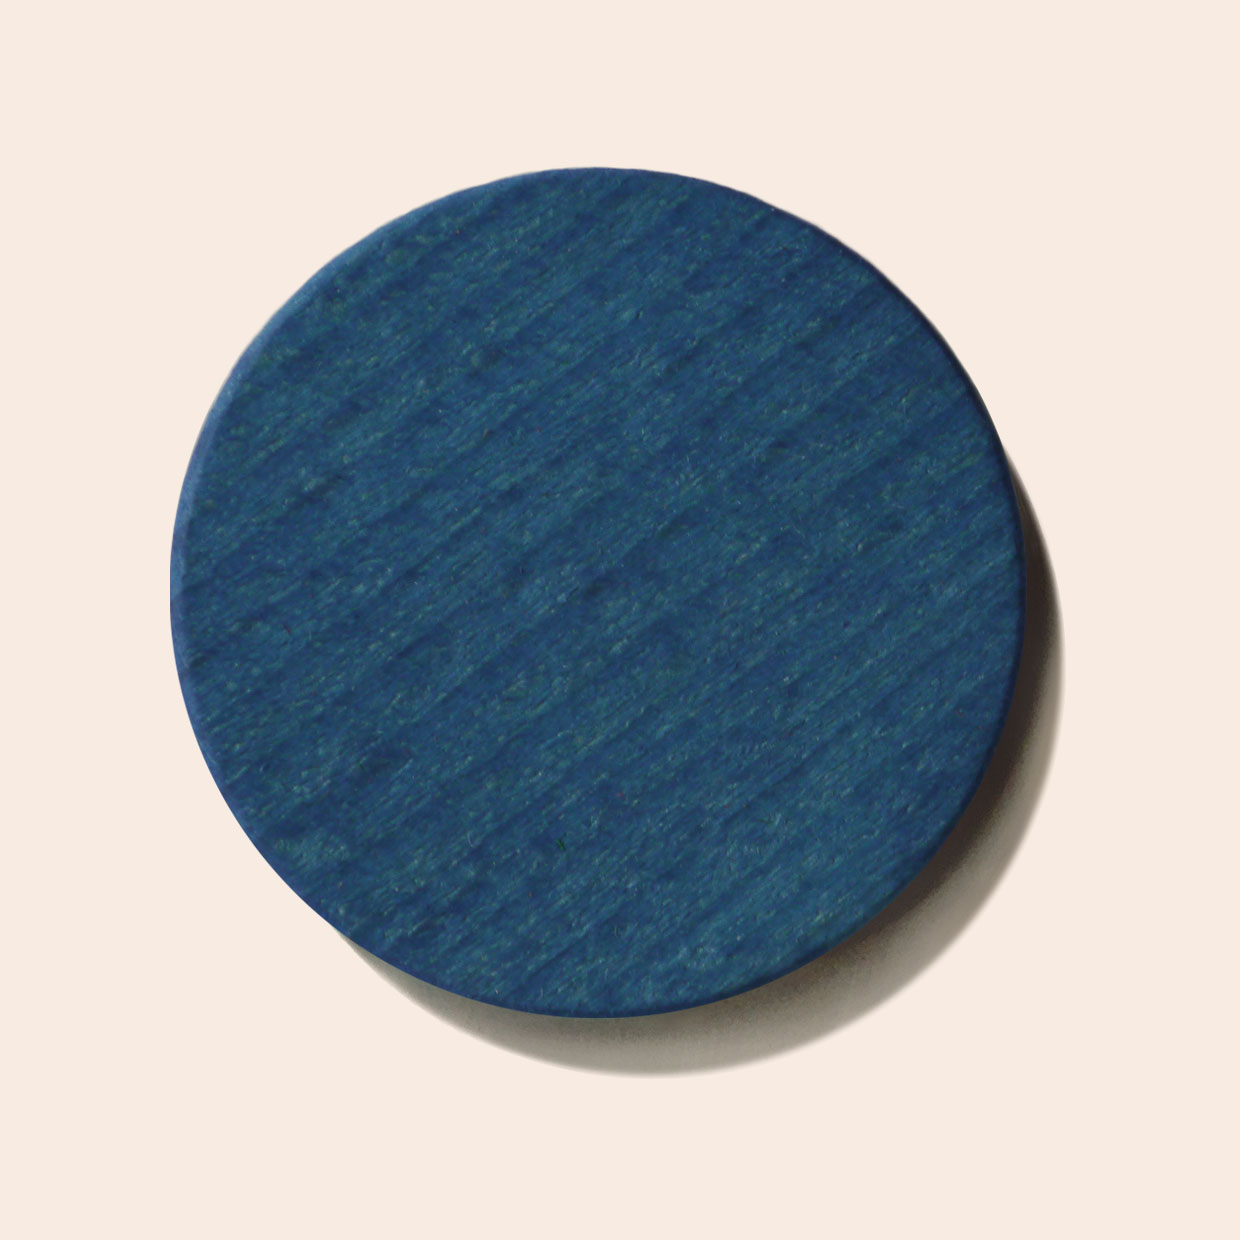 Sloe Wood TL Wood Dye Stain Swatch Royal Blue 1 